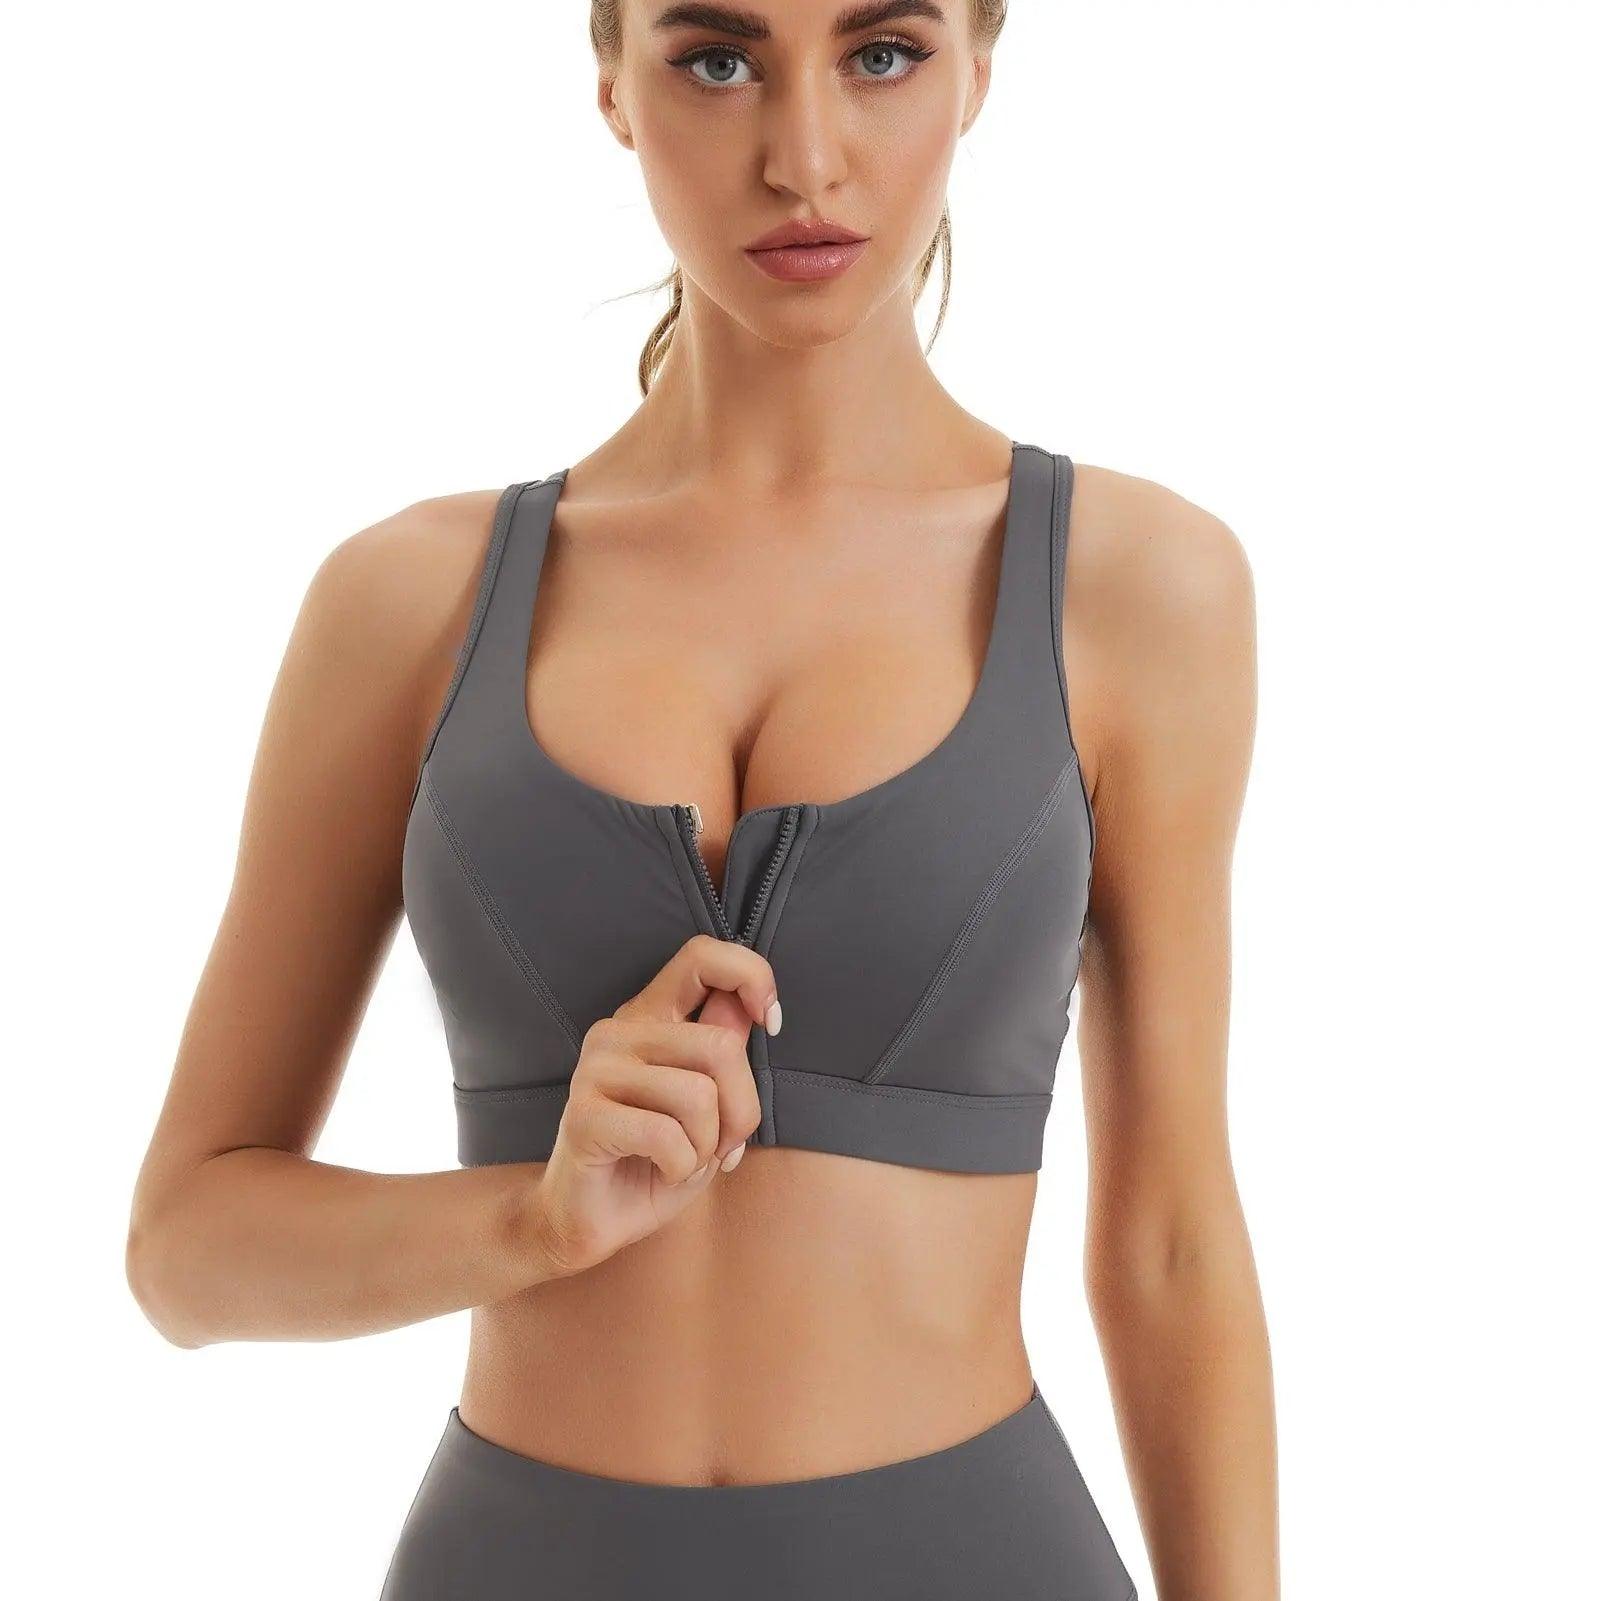 ATHLECIA Garbee Bra W/Mesh - Sports bra Women's, Buy online